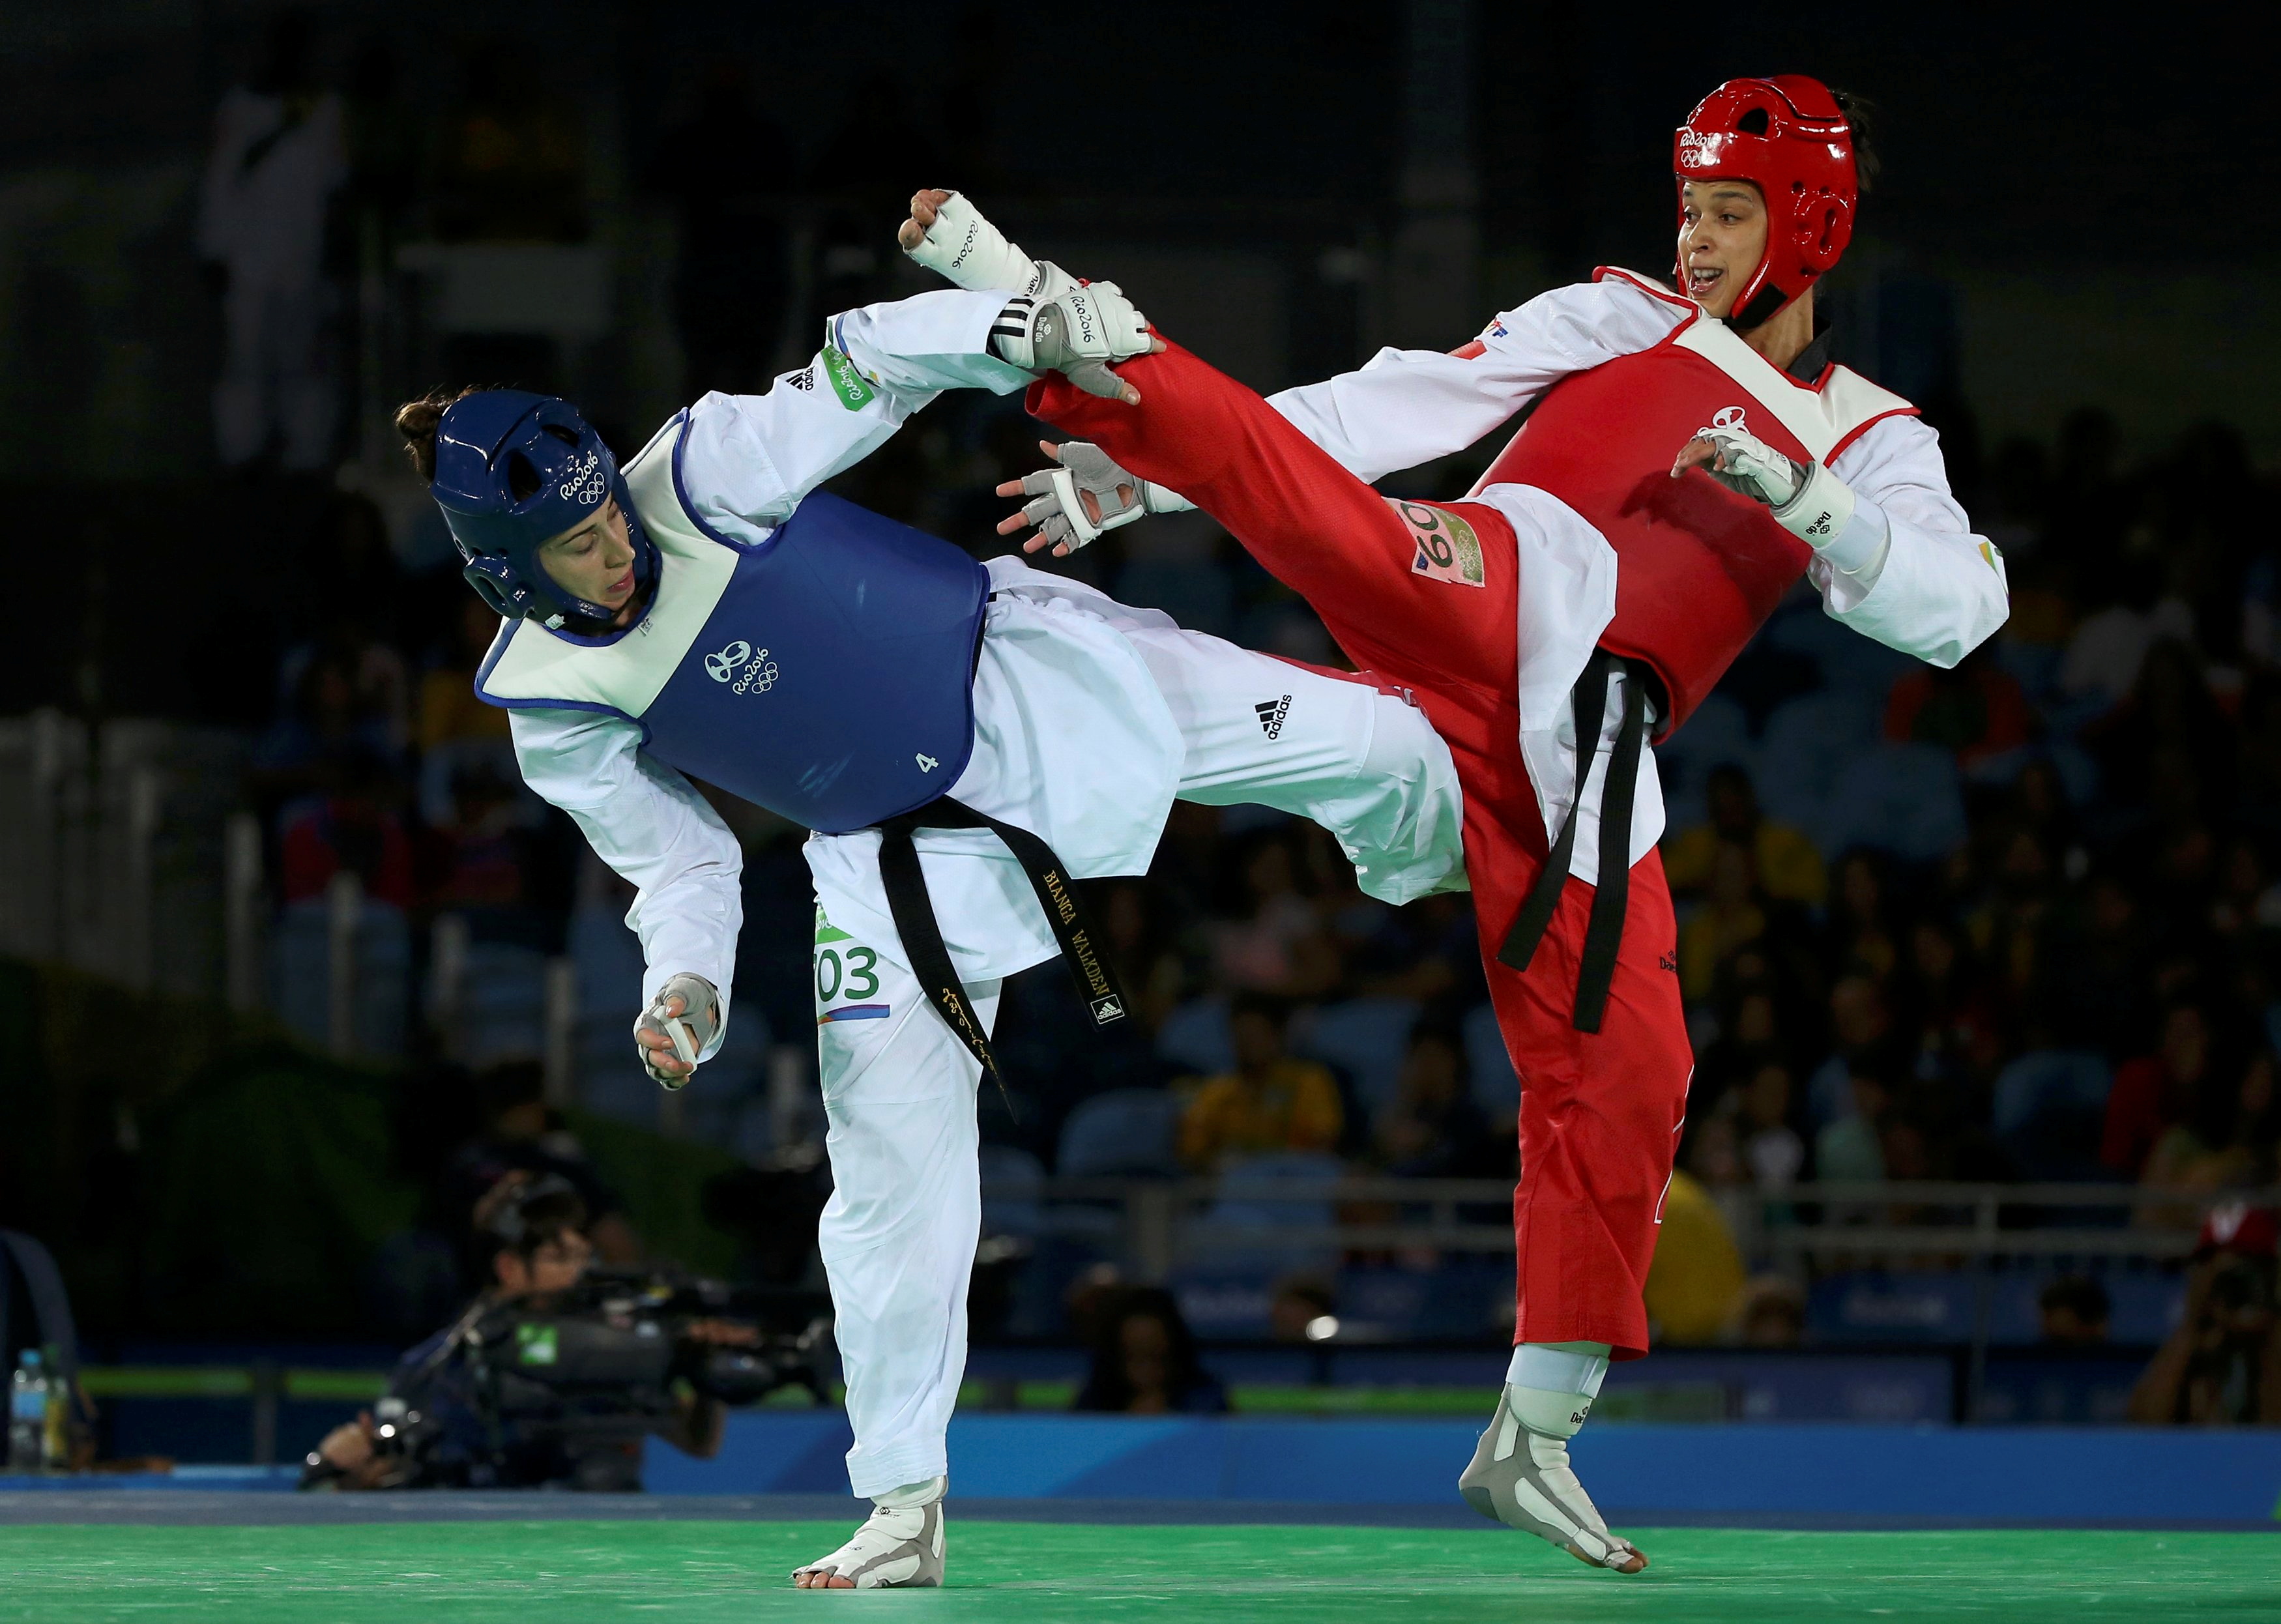 TaekwondoKorean combat sport looks to put best foot forward Reuters